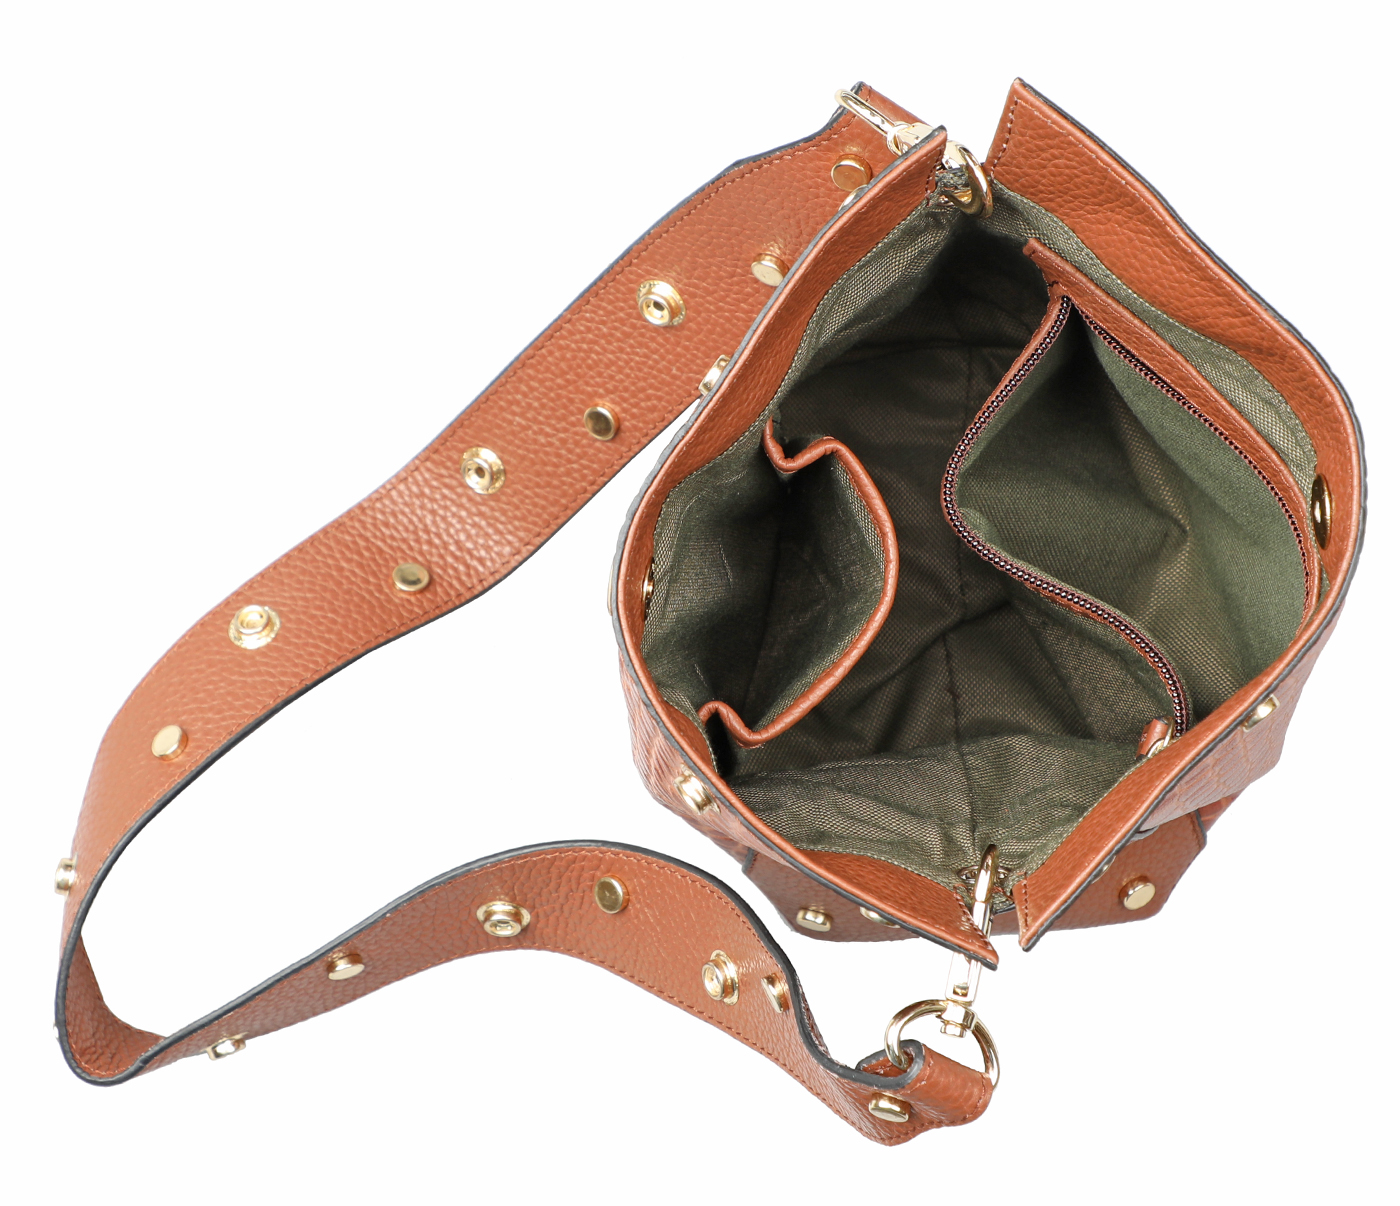 B876-Valencia-Shoulder work bag in Genuine Leather - Tan